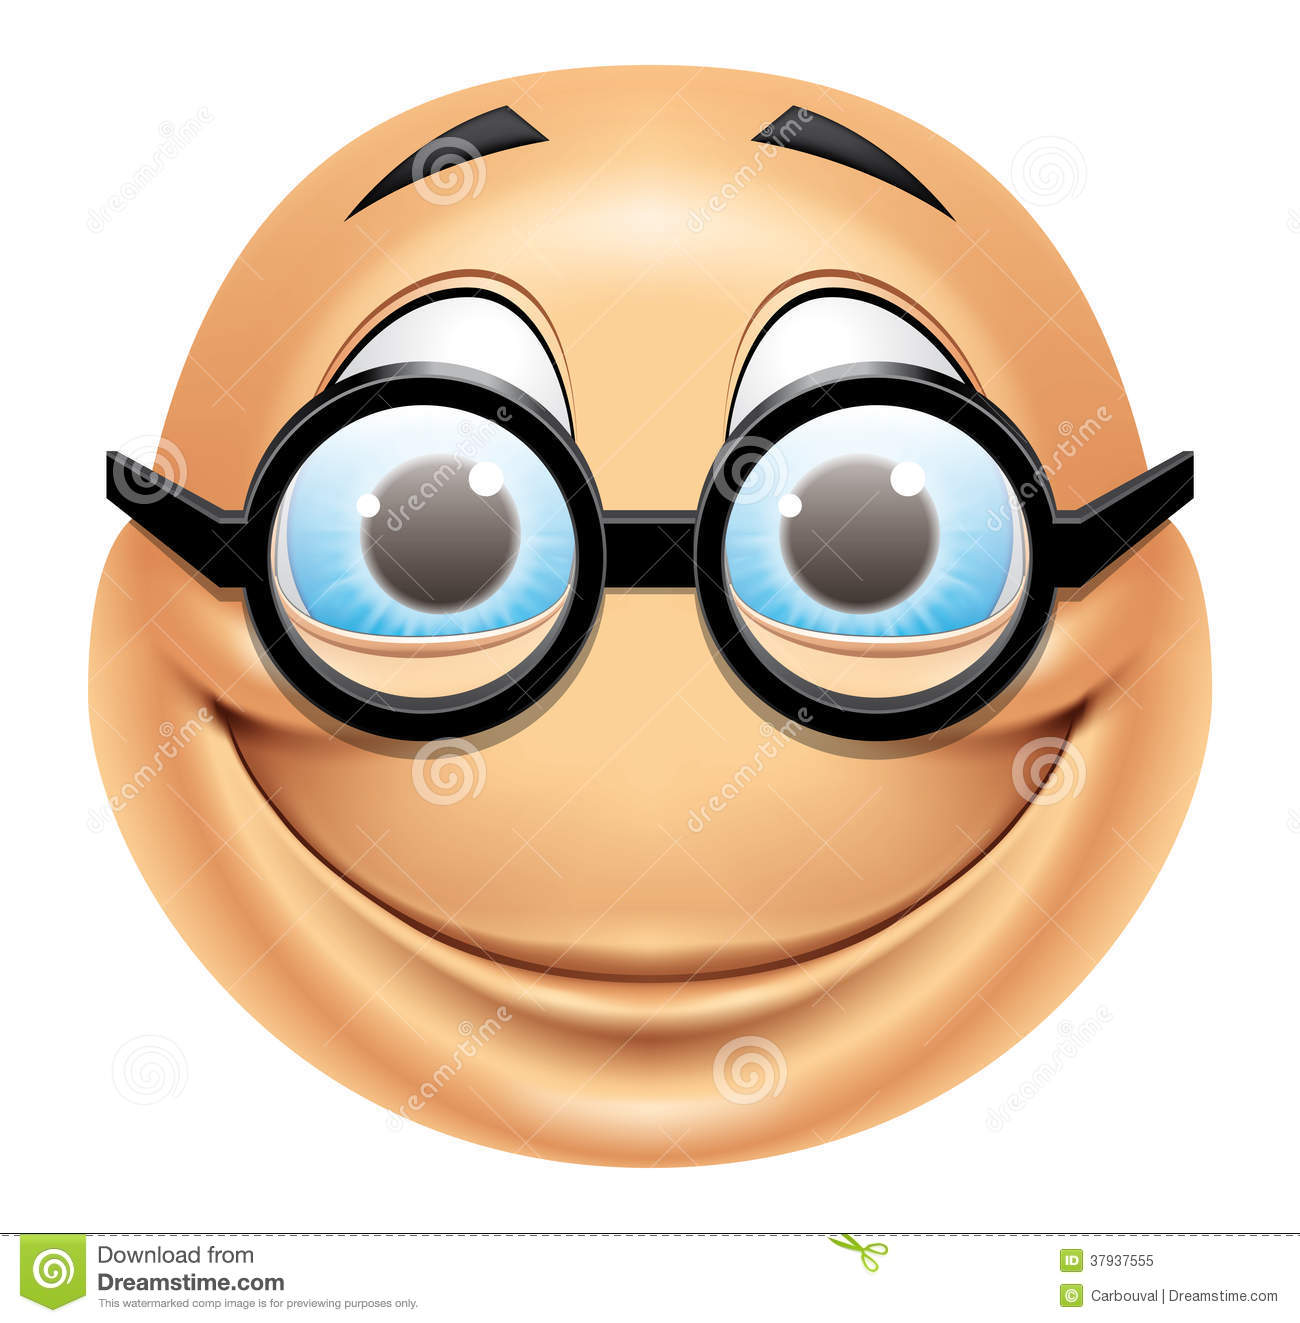 Emoticon with Nerd Glasses